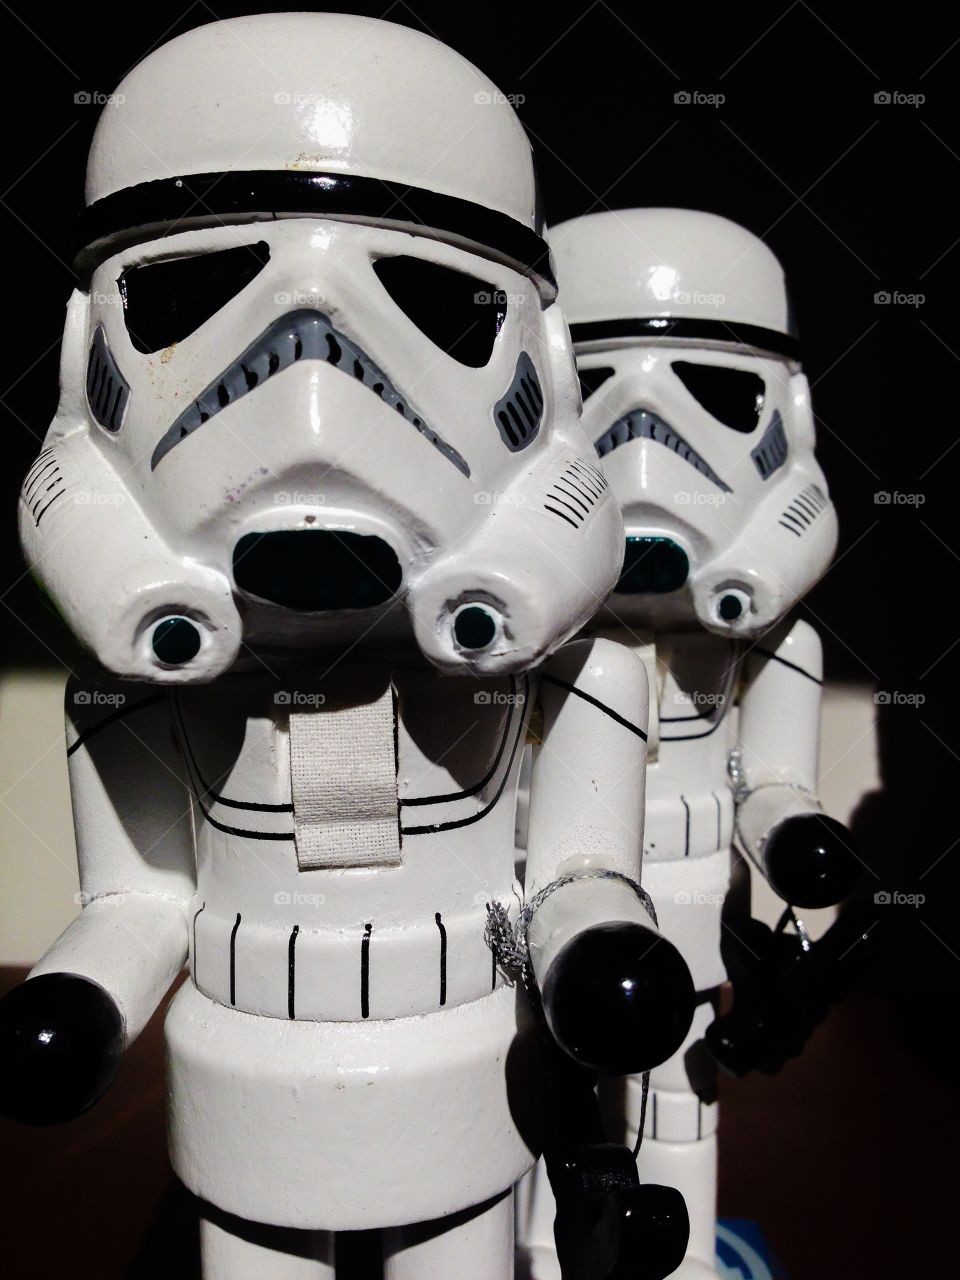 Star Wars storm trooper's